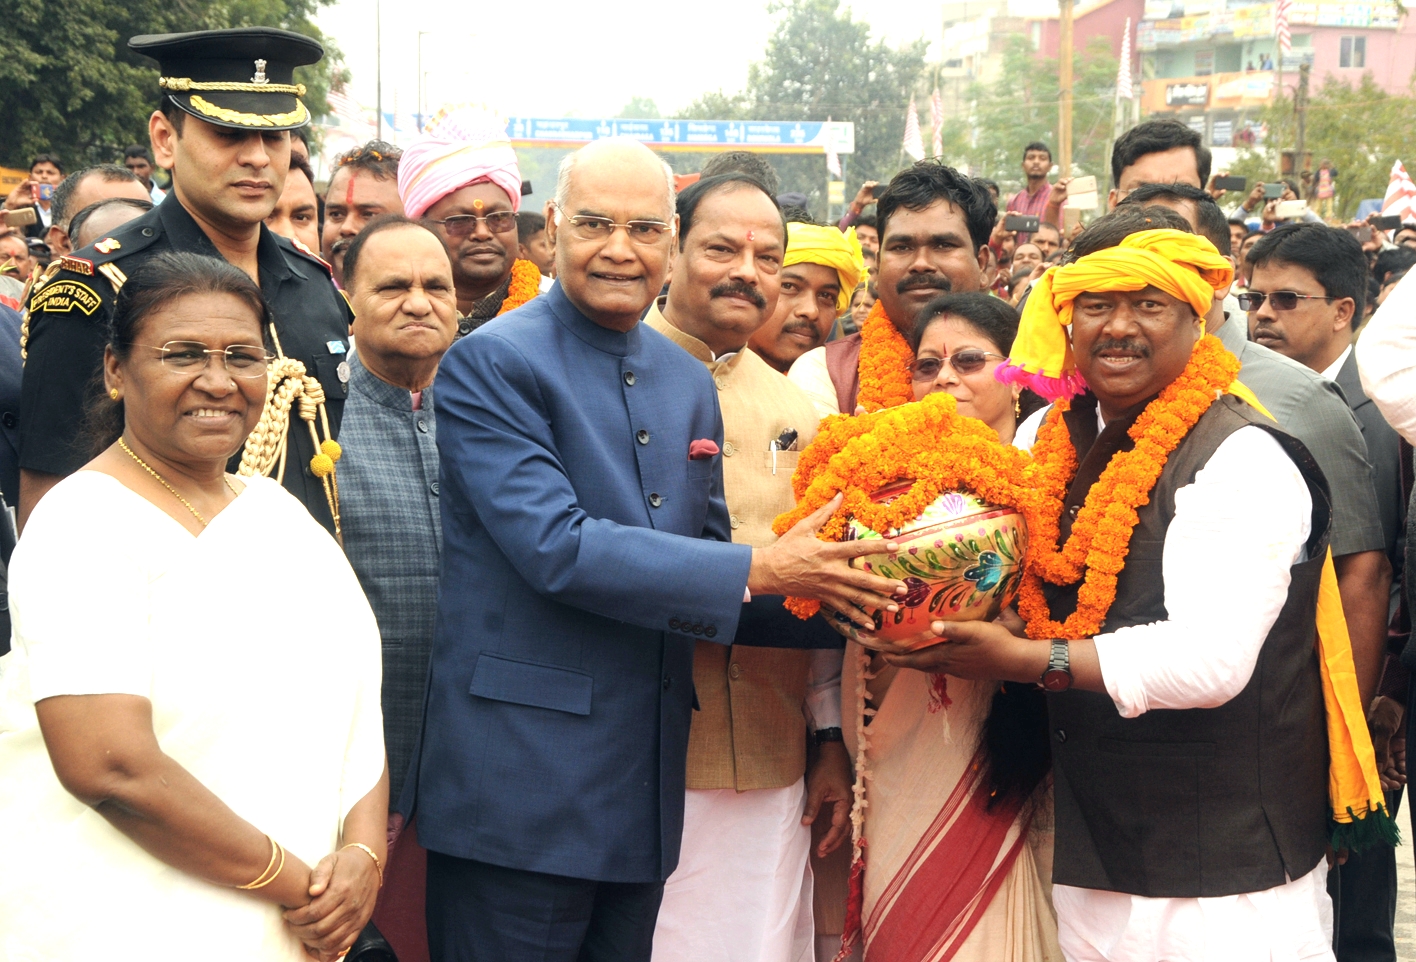 Neel Kanth Singh Munda presented soil of Bhagwan Birsa Munda to President, Ram Nath Kovind.